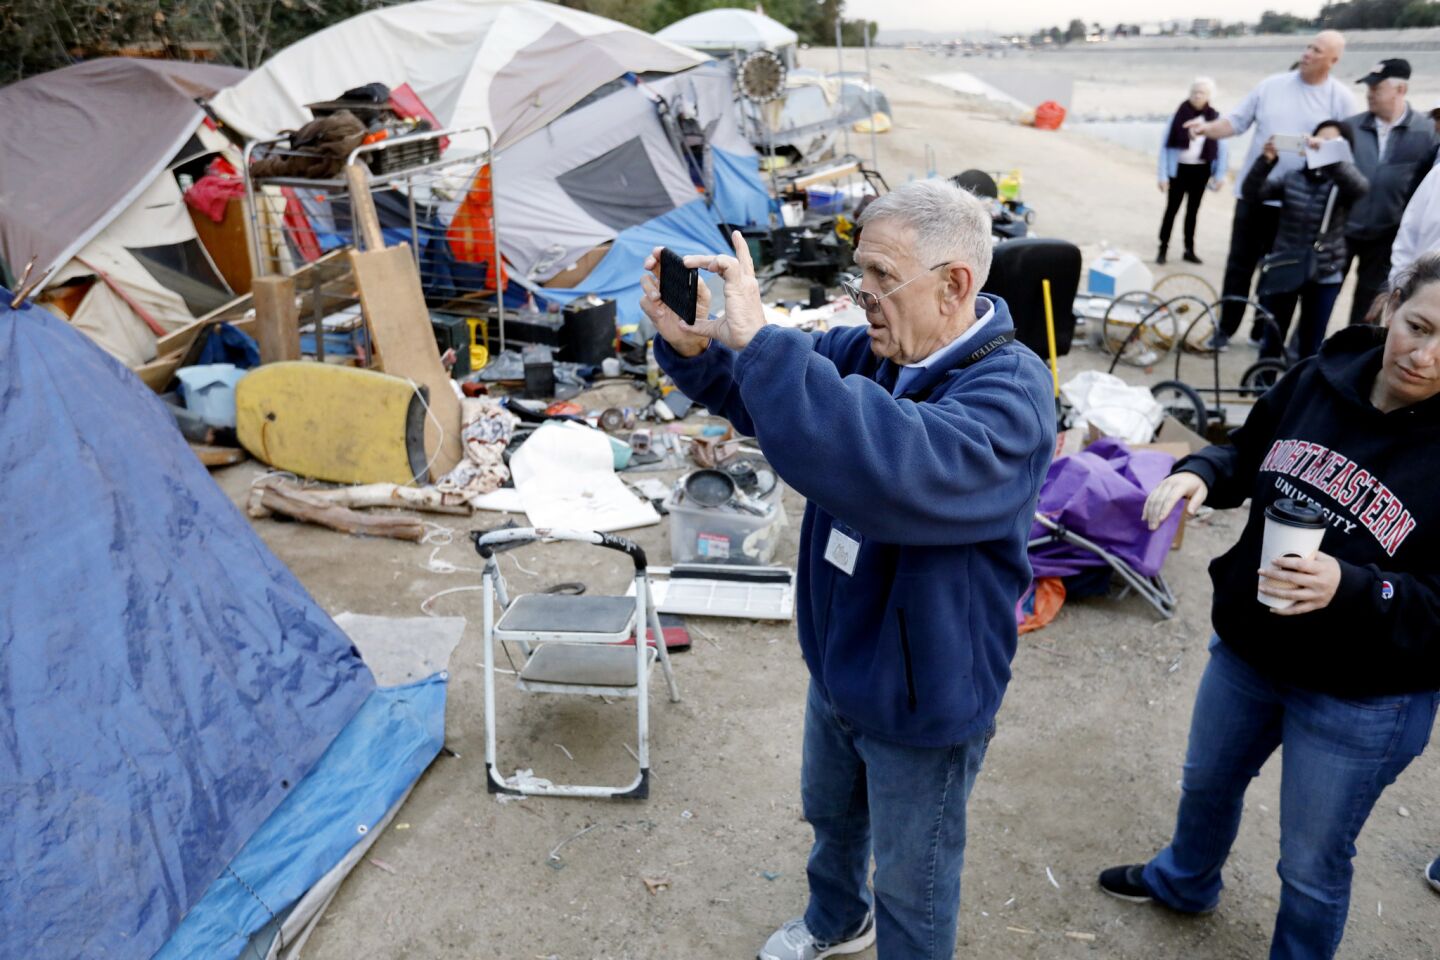 Judge visits homeless encampment